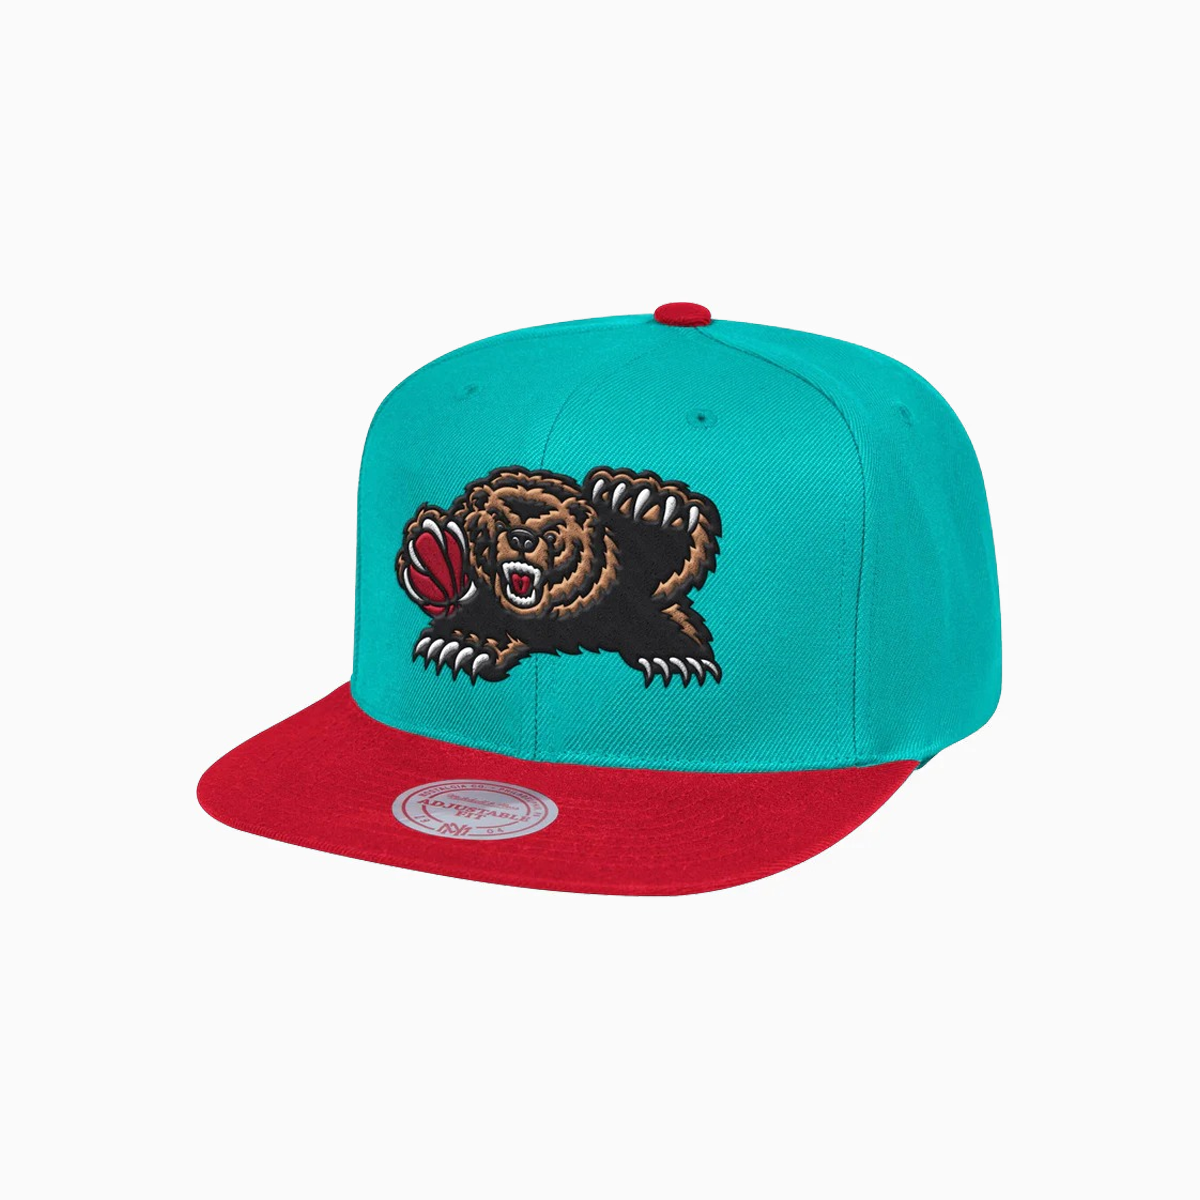 Mitchell & Ness Vancouver Grizzlies NBA Logo Snapback Hat Cap - Black/Teal